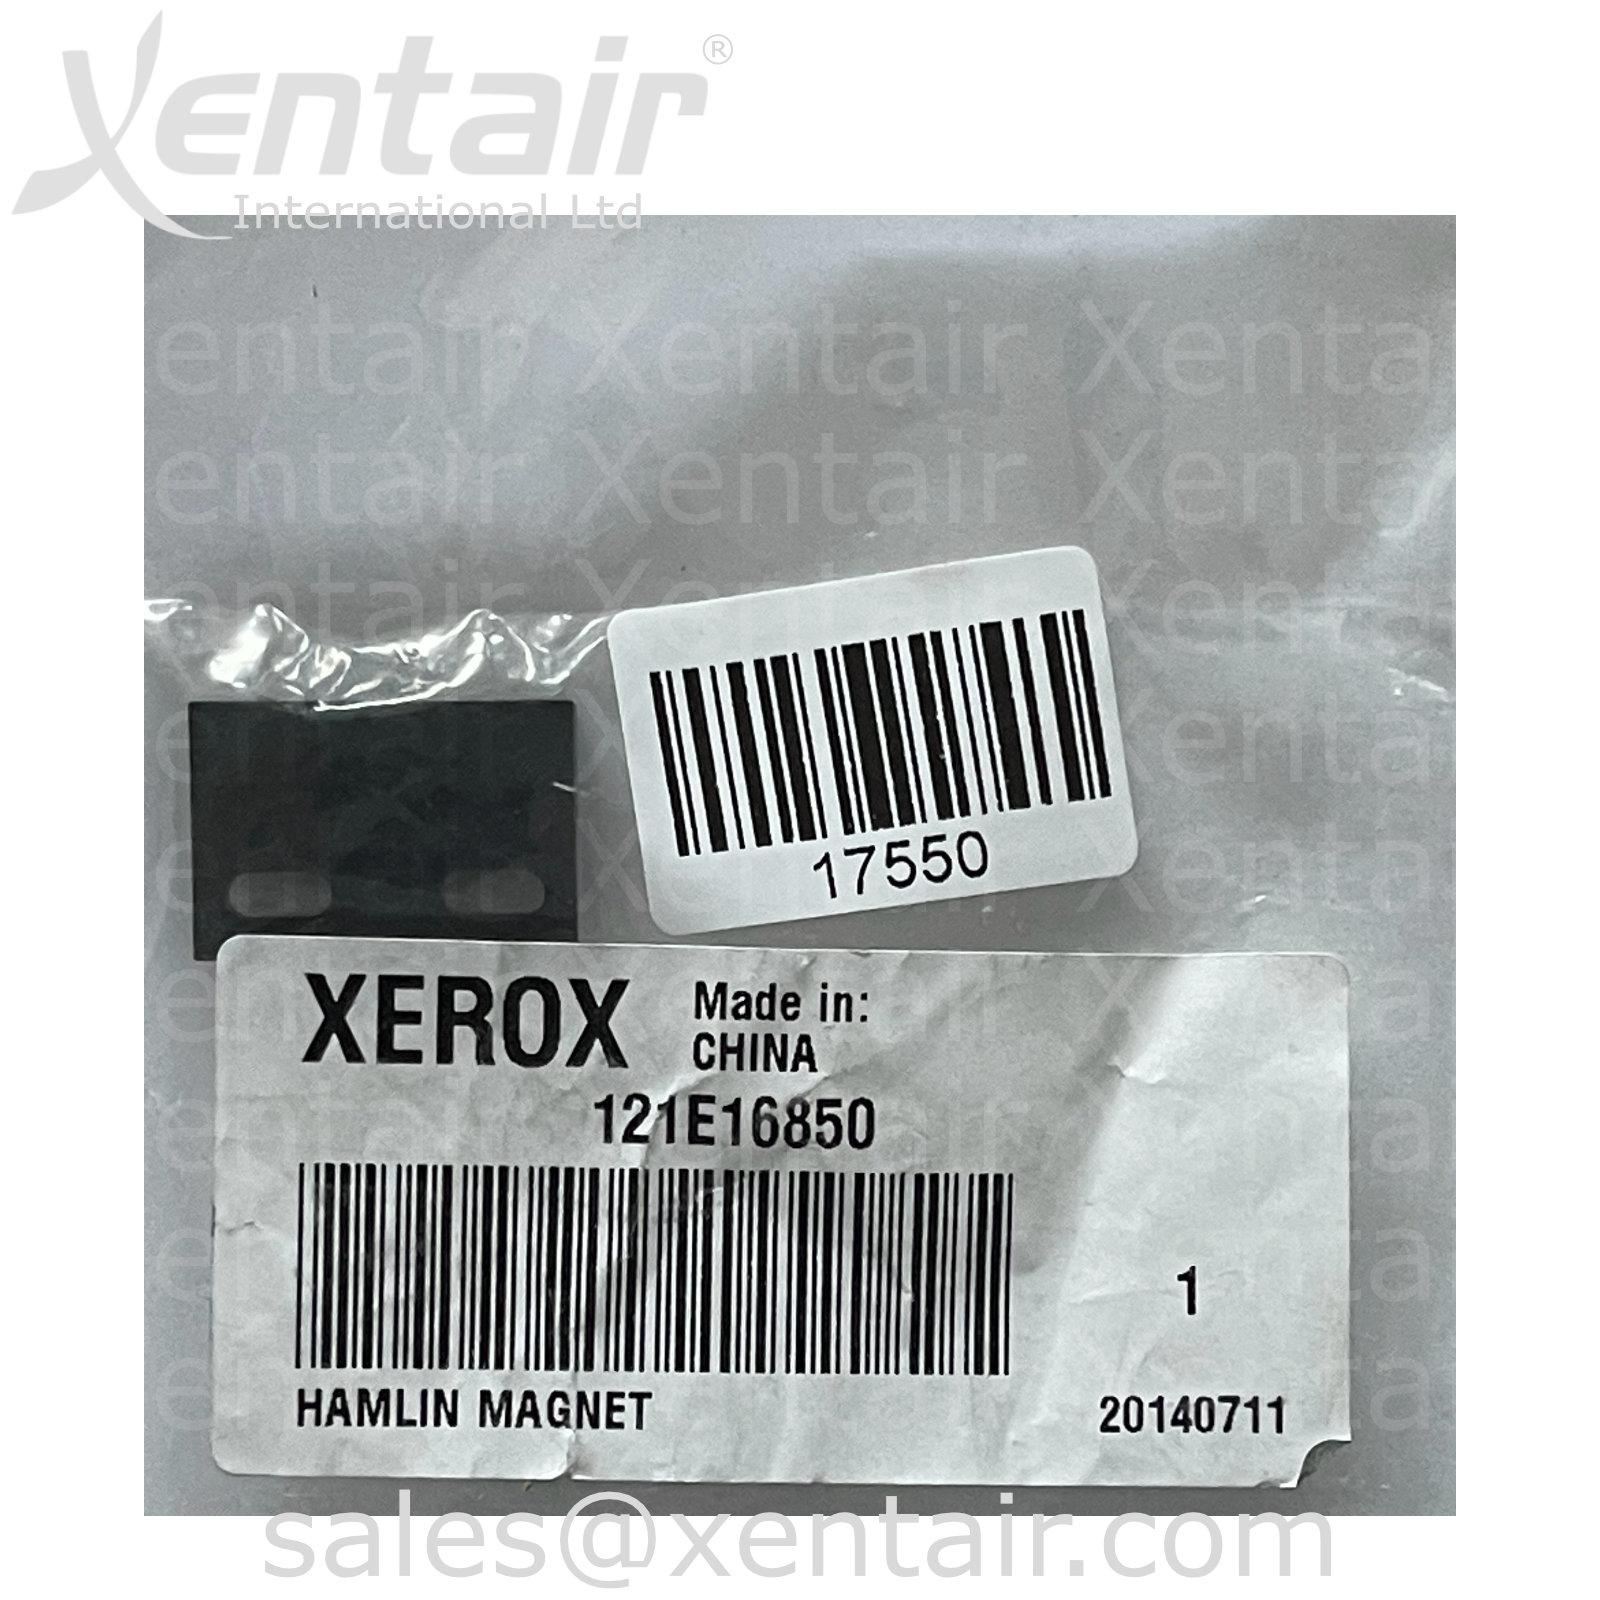 Xerox® iGen3™ Hamlin Magnet 121E16850